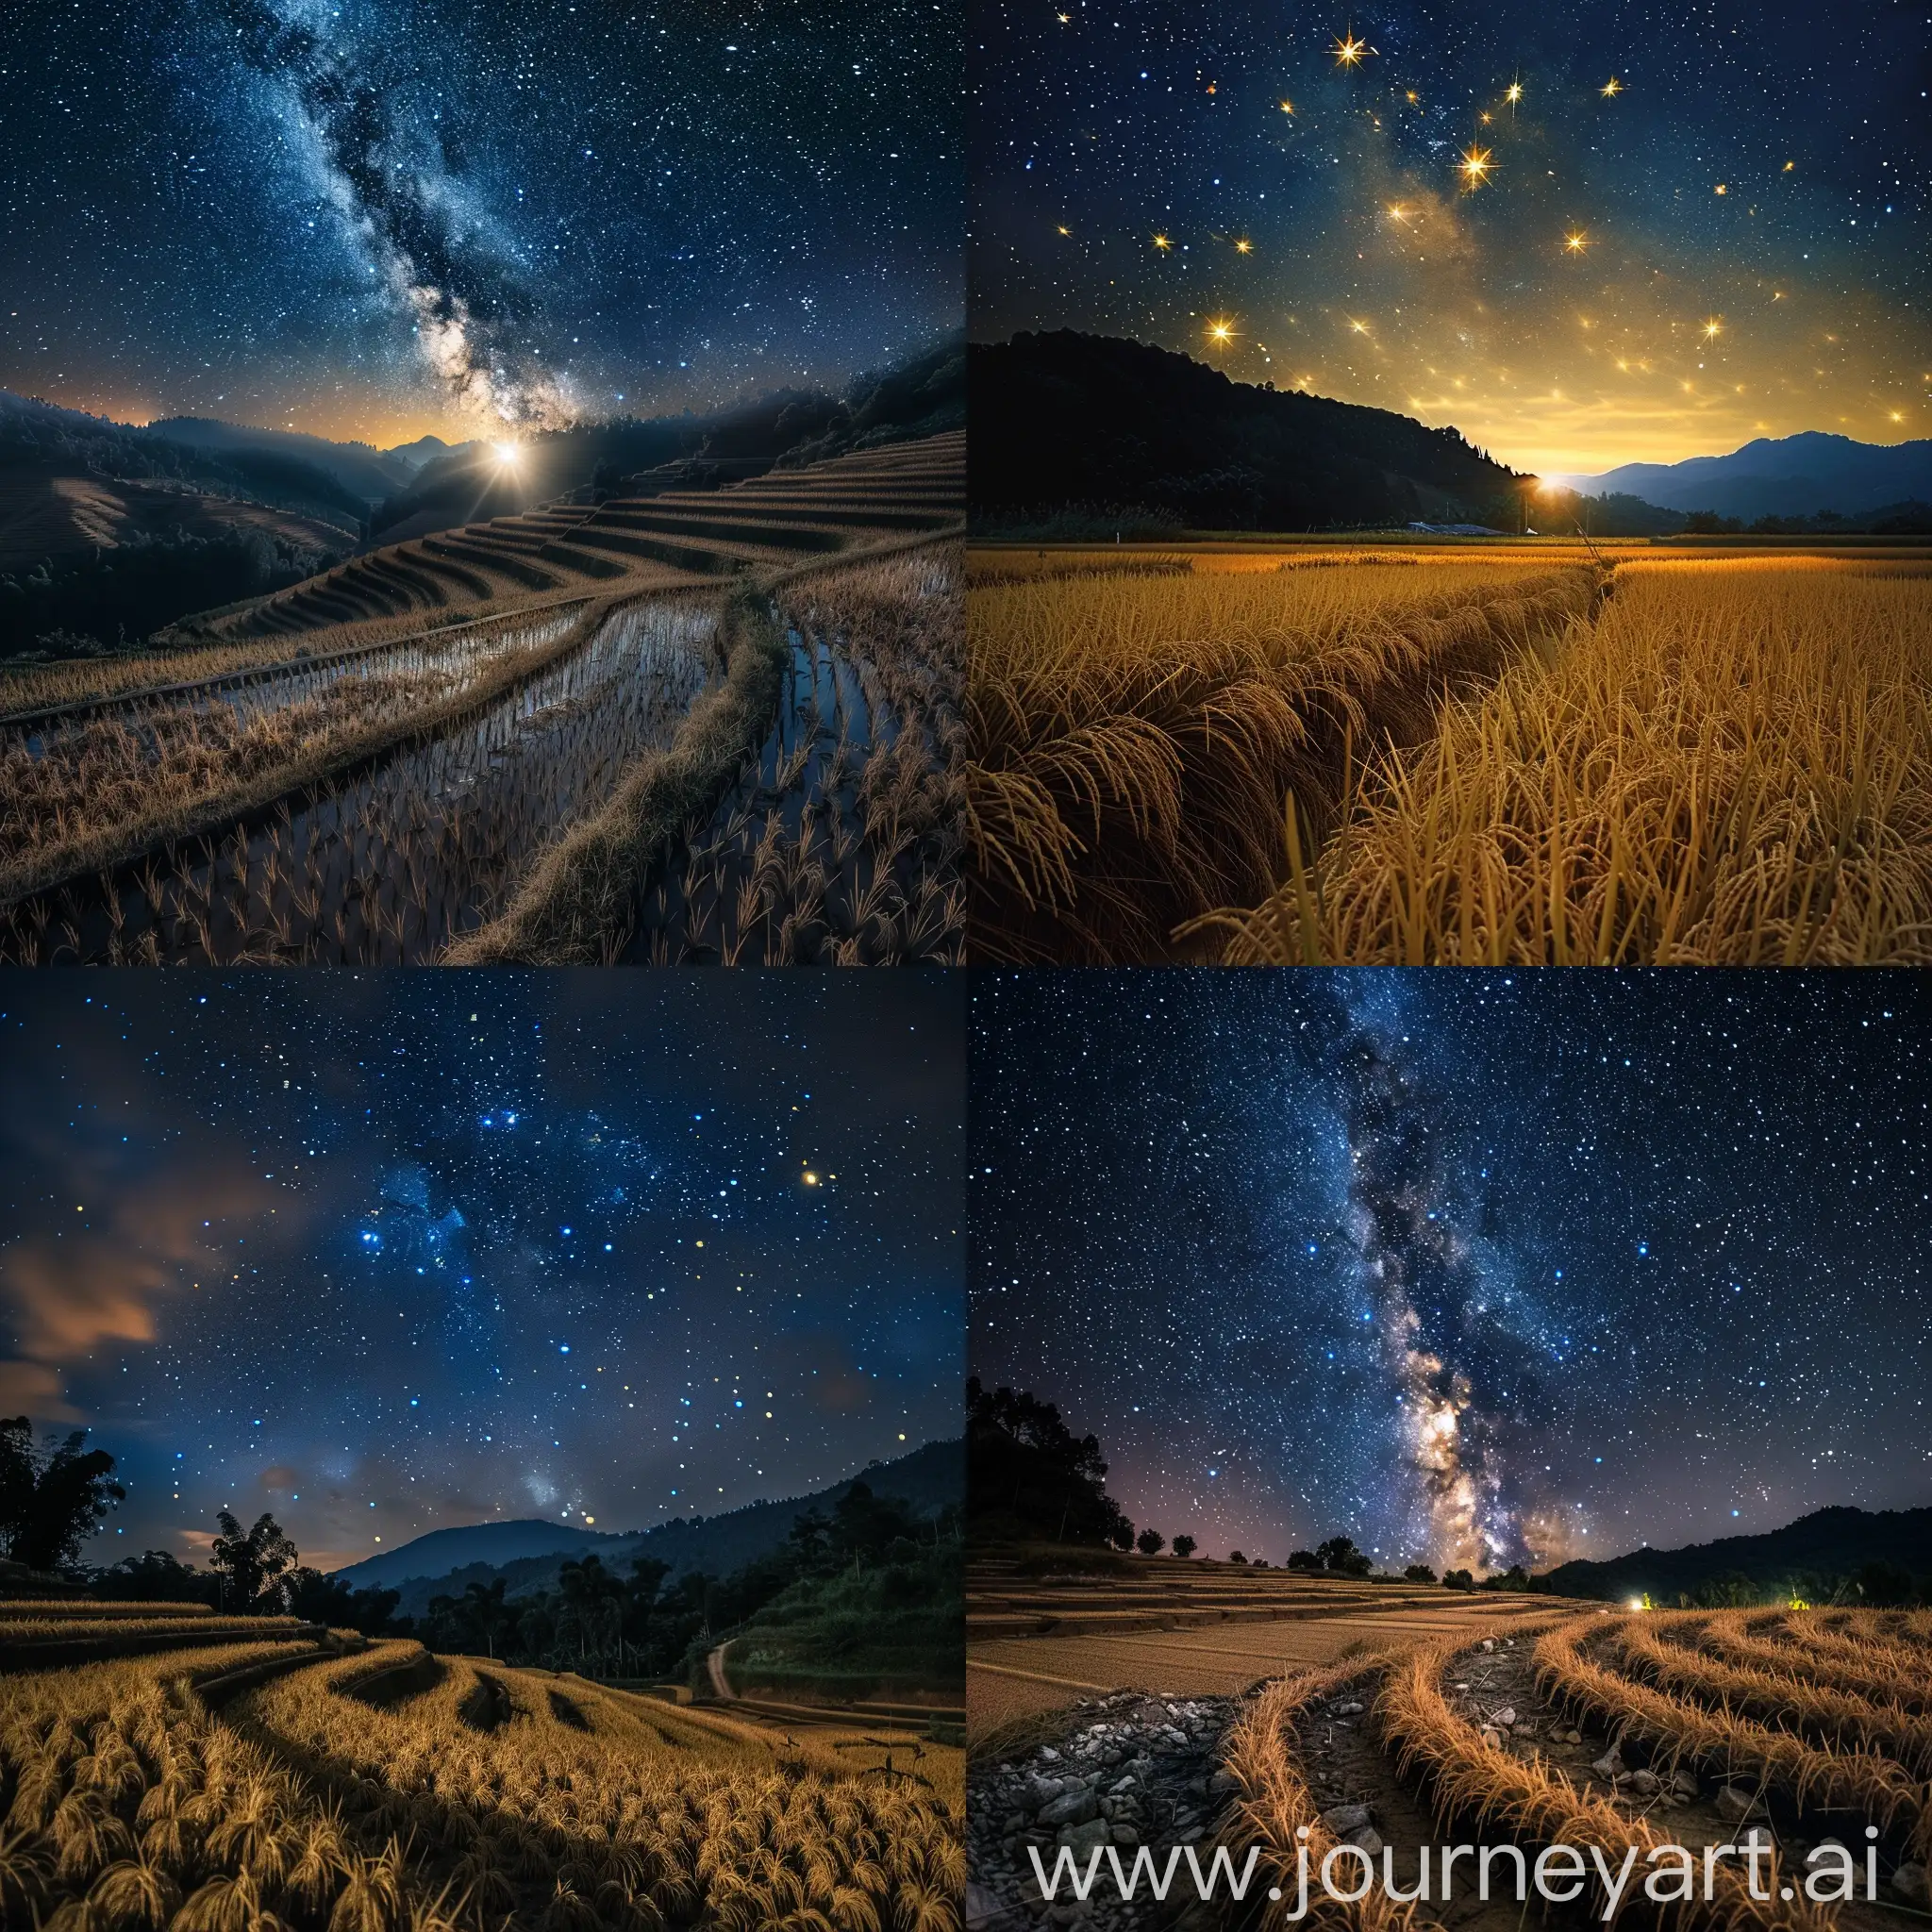 Starry-Night-Over-Lush-Rice-Fields